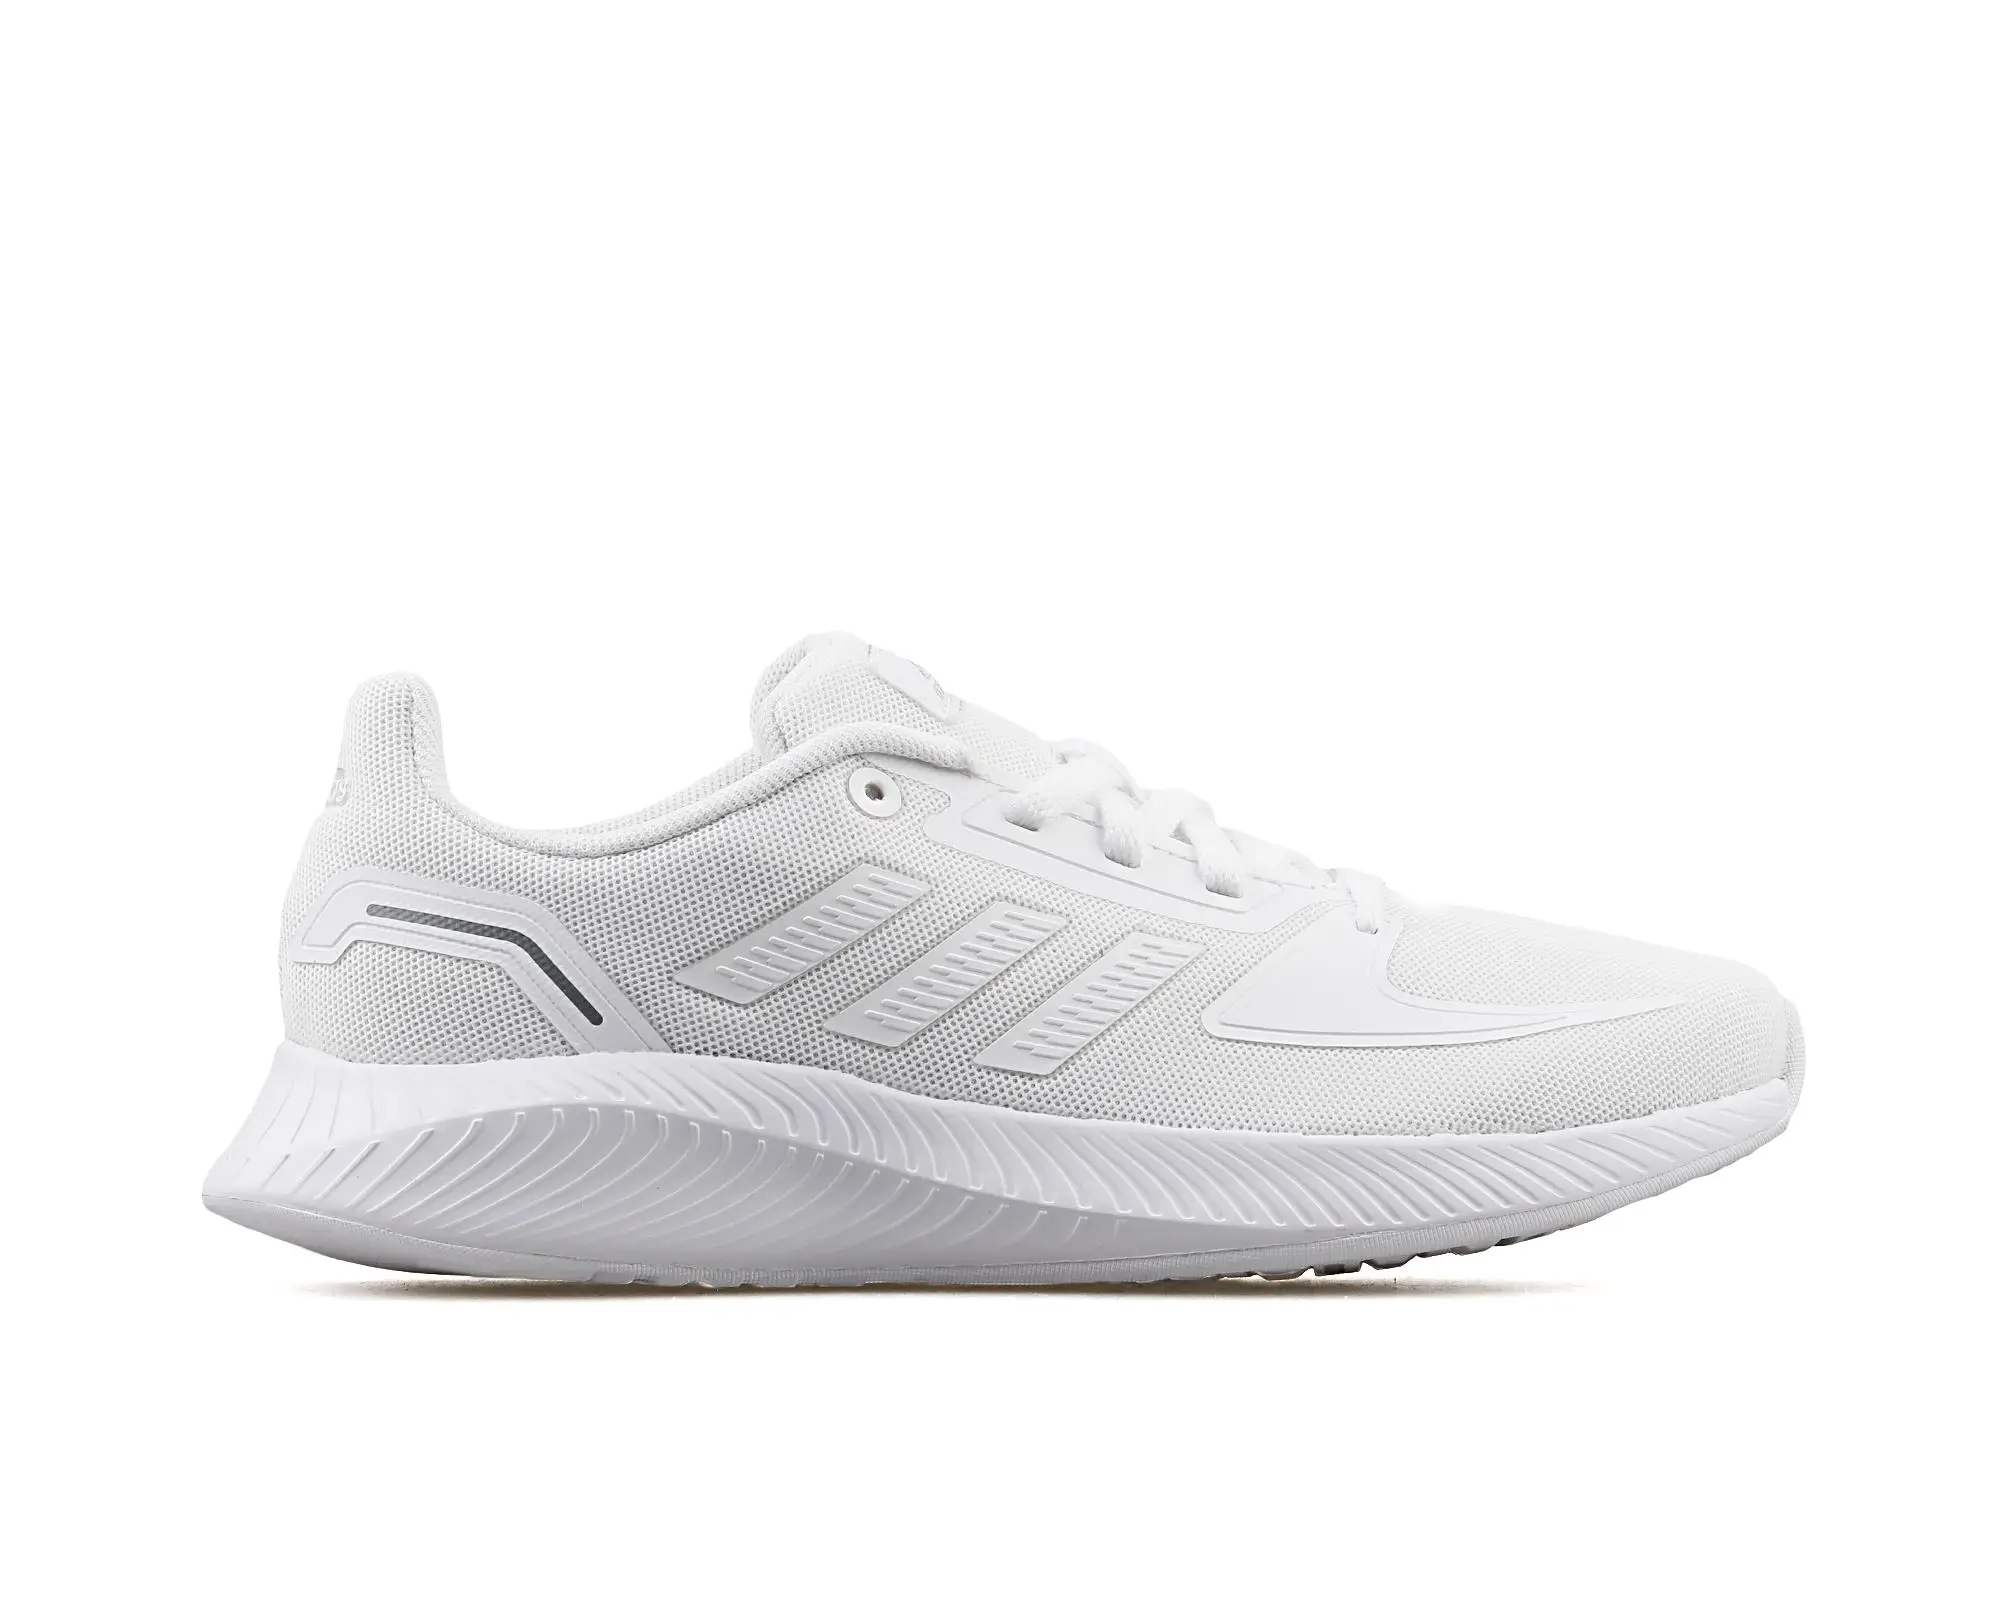 Adidas Original Runfalcon 2.0 K White Kids Shoes Unisex Girls & Boys Casual Sneakers Sneakers